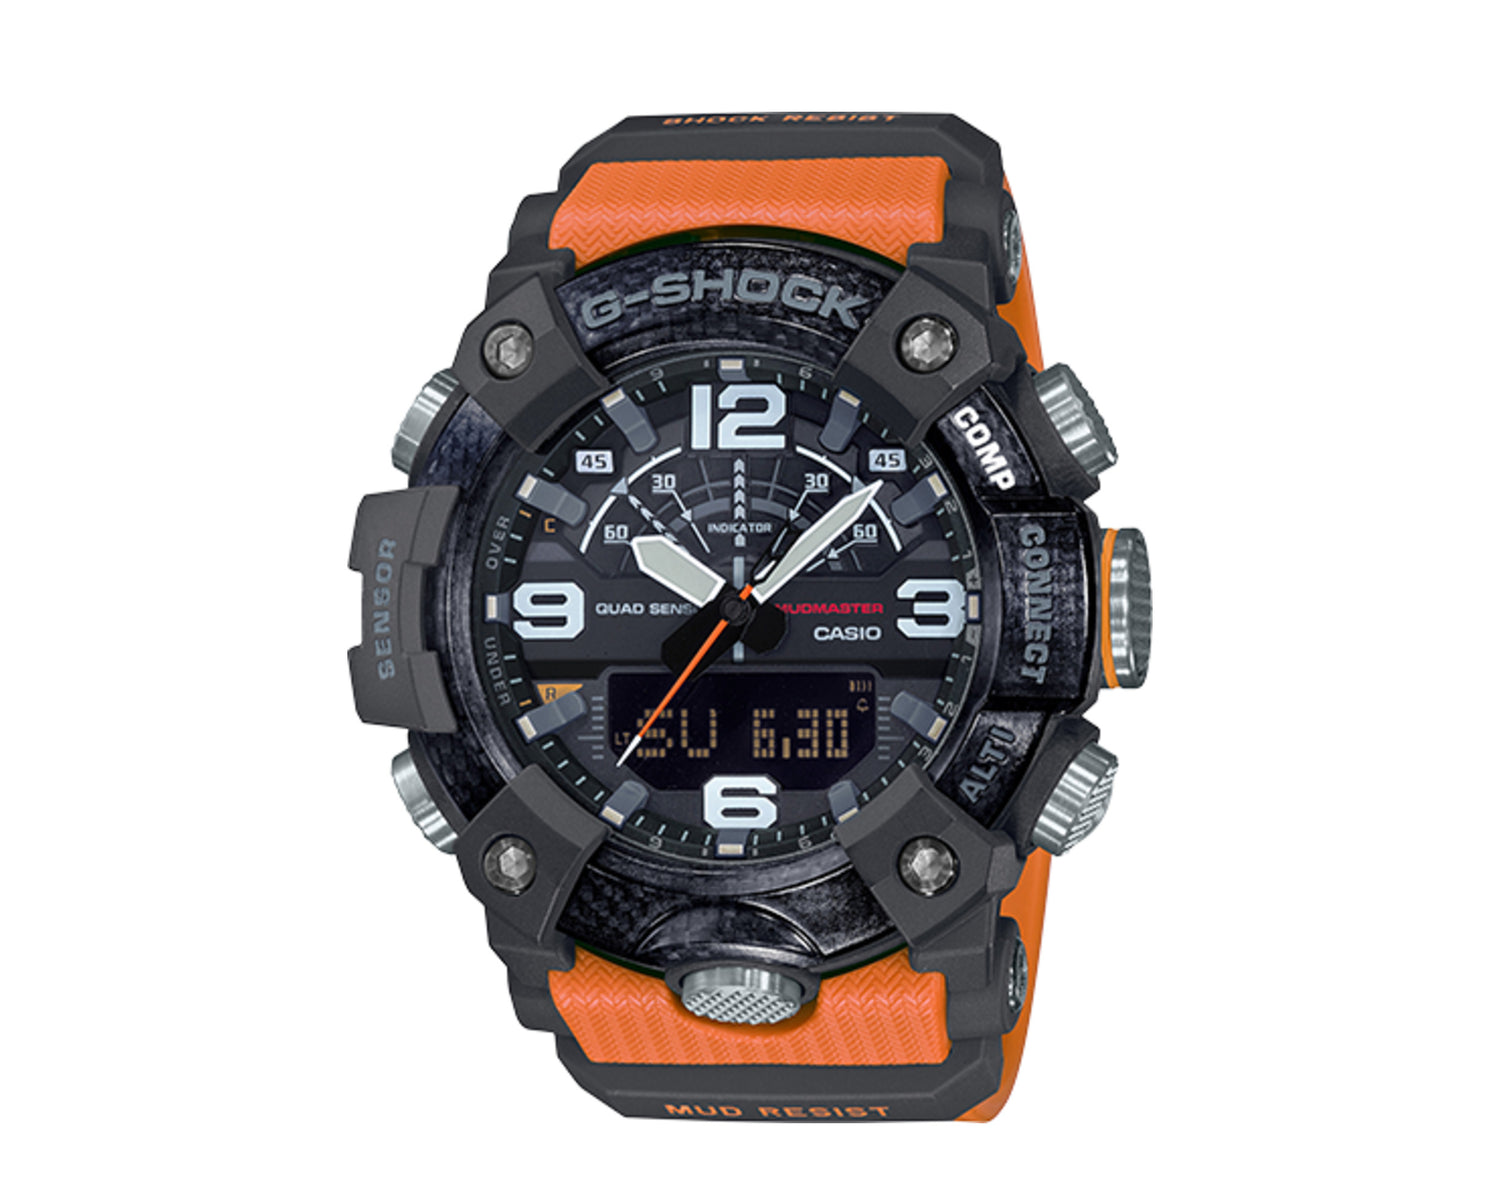 Casio G-Shock GGB100 MudMaster Analog-Digital Resin Men's Watch